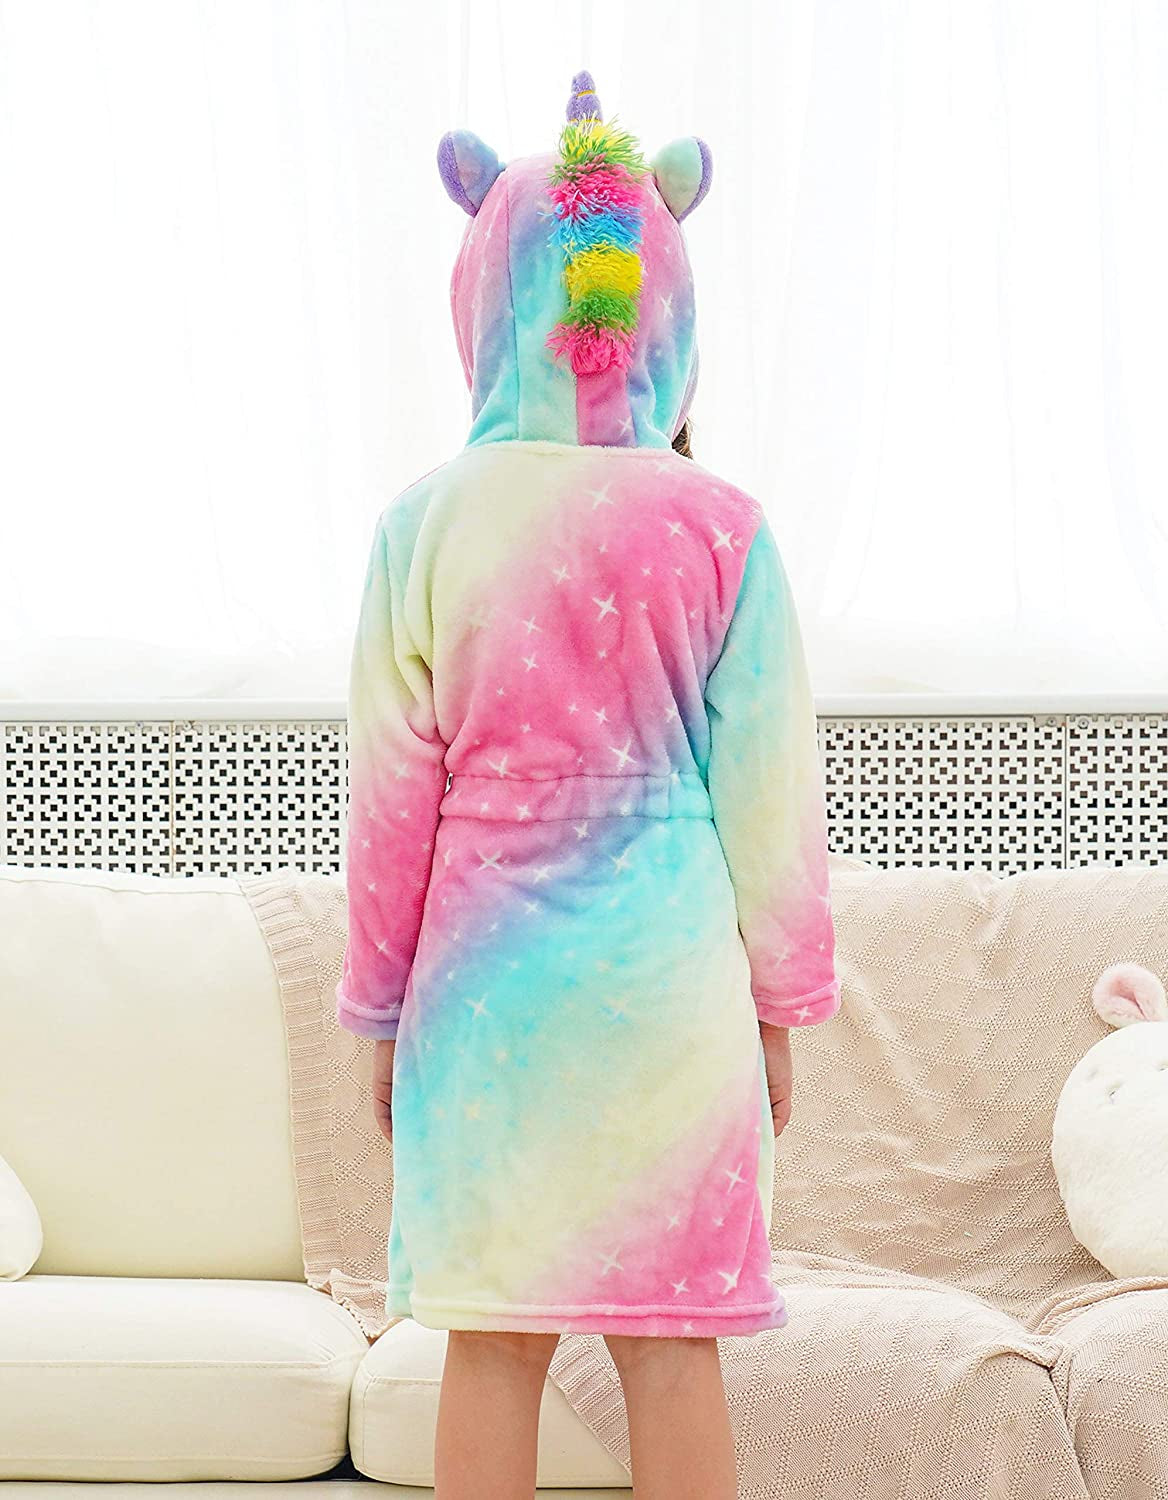 Soft Unicorn Hooded Galaxy Bathrobe - Unicorn Gifts for Girls